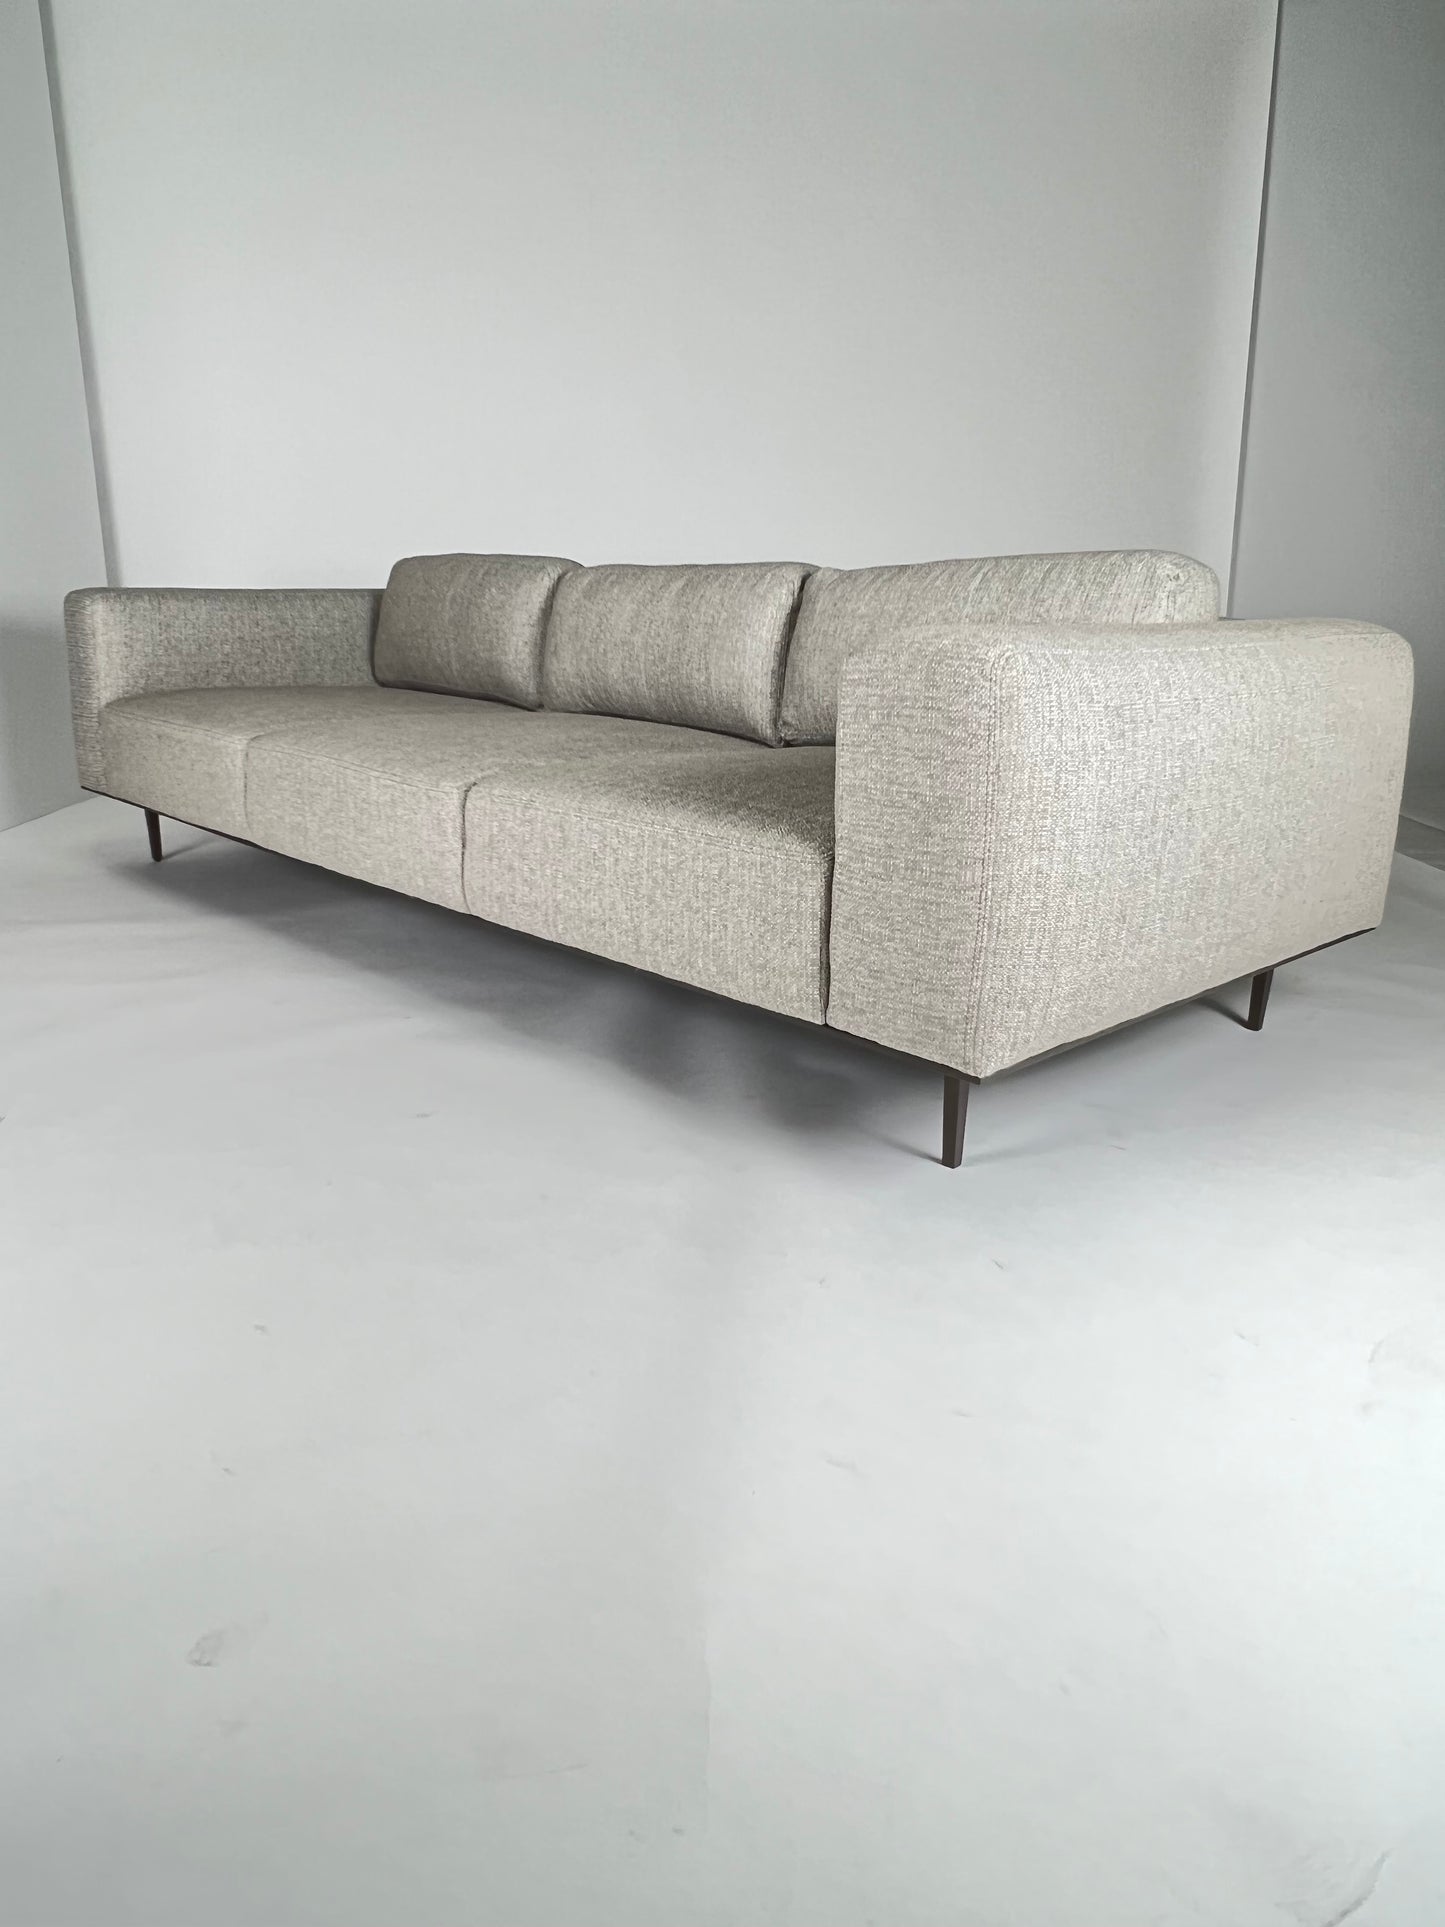 Pale tan / cream sofa, classic Italian styling